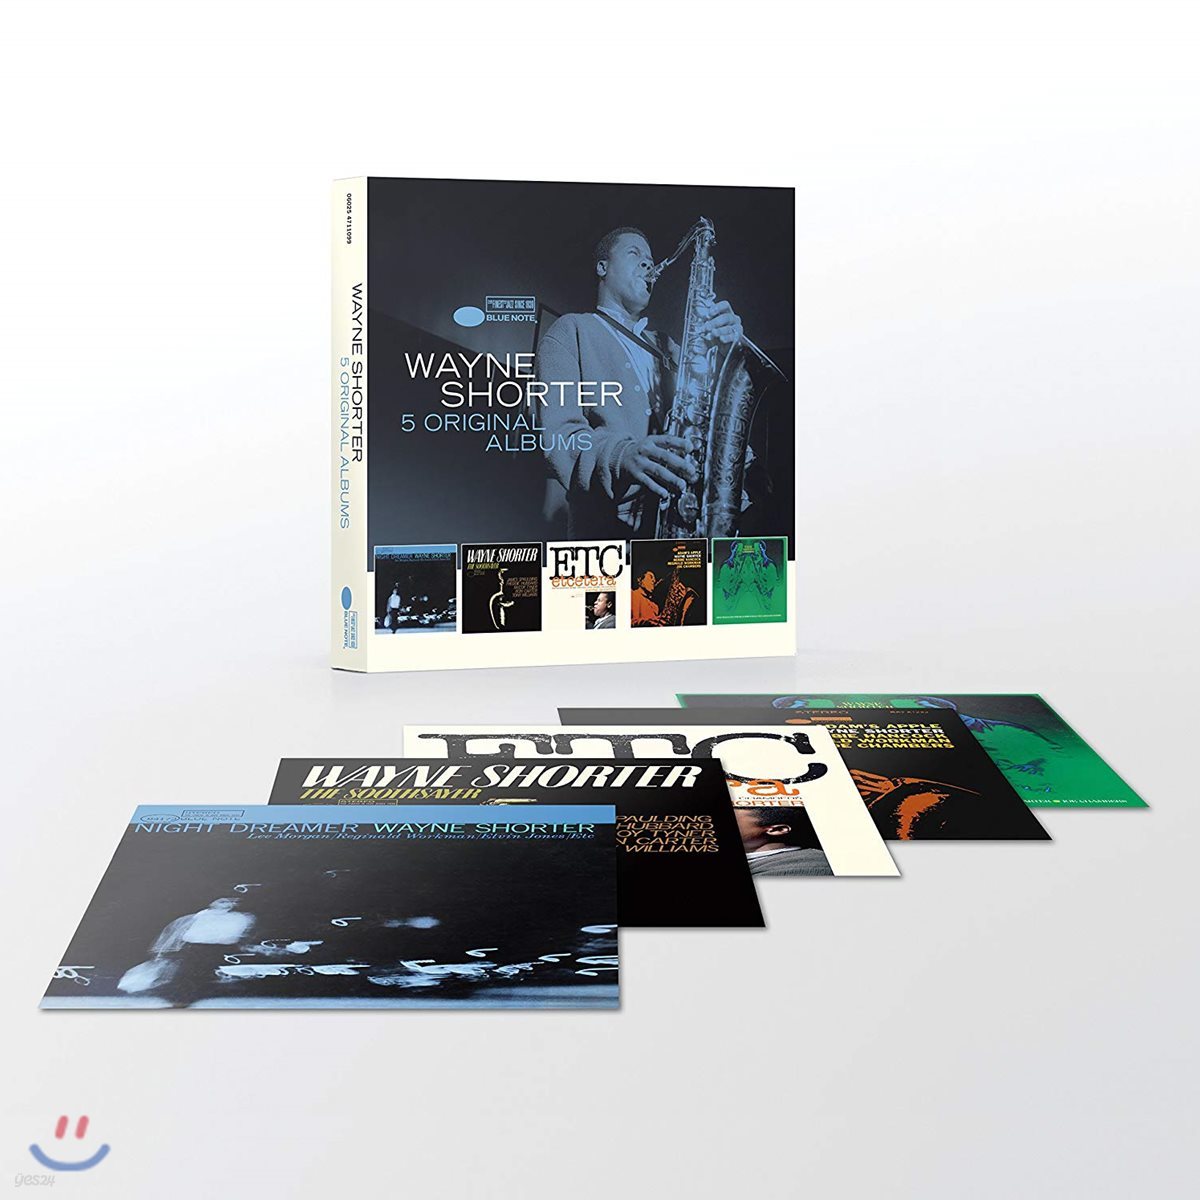 Wayne Shorter - 5 Original Albums (With Full Original Artwork) 웨인 쇼터 오리지널 앨범 5CD 박스 세트